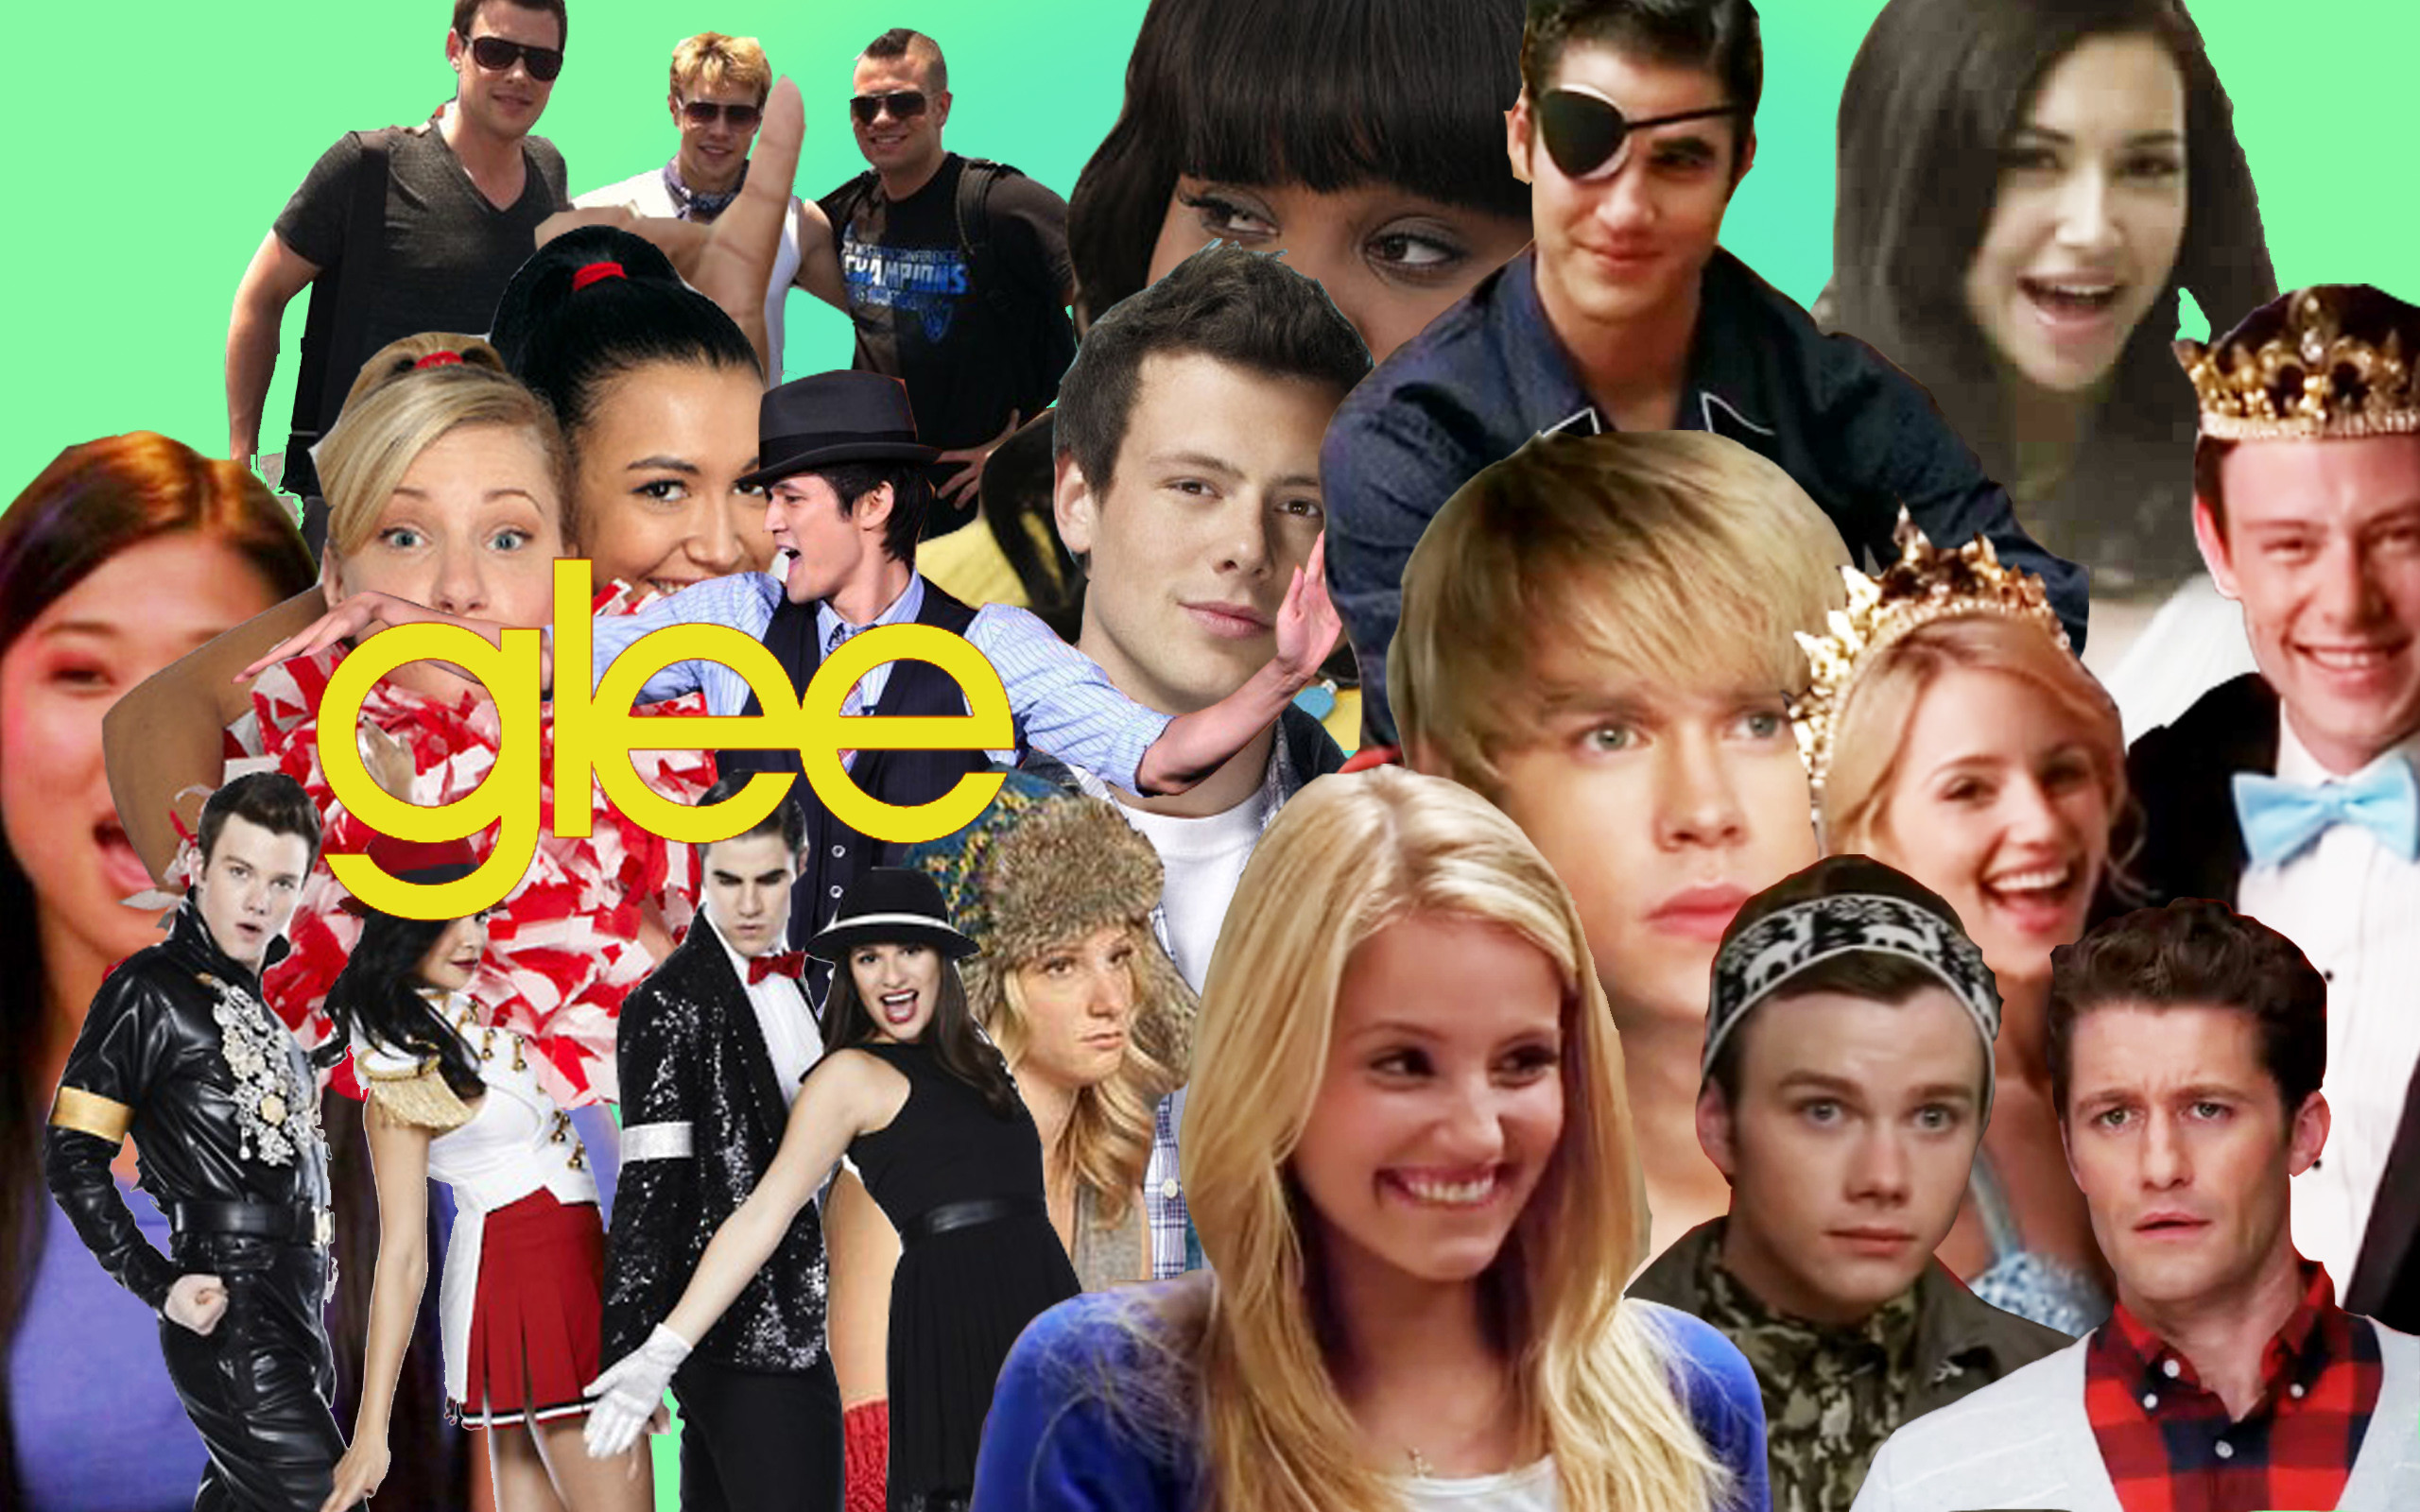 2560x1600 glee wallpaper - Glee Wallpaper (28784708) - Fanpop